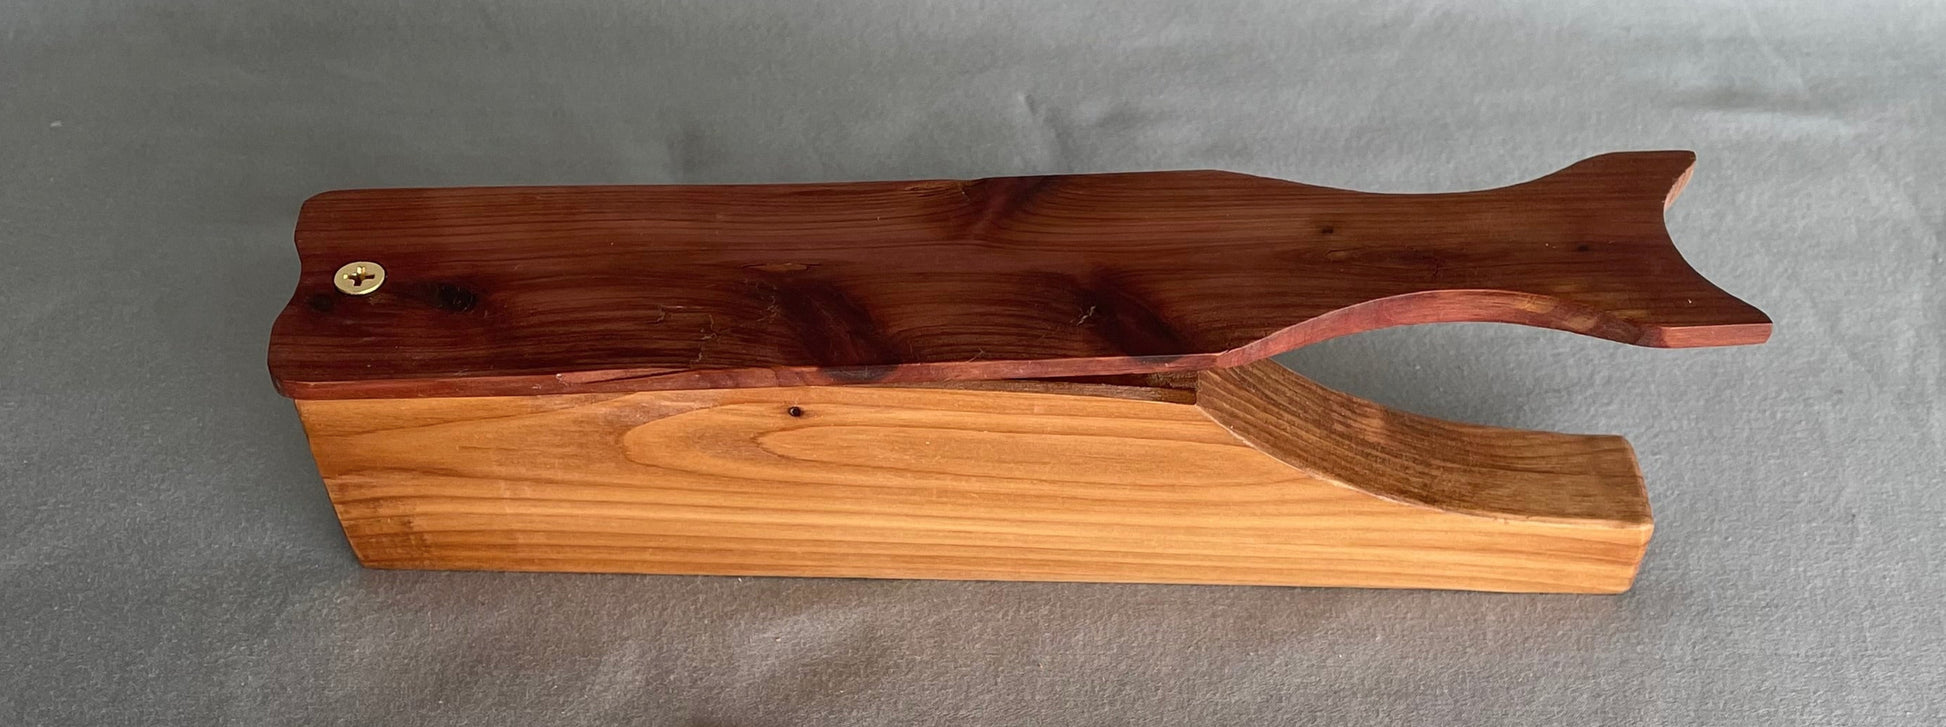 cedar wood handmade box turkey call